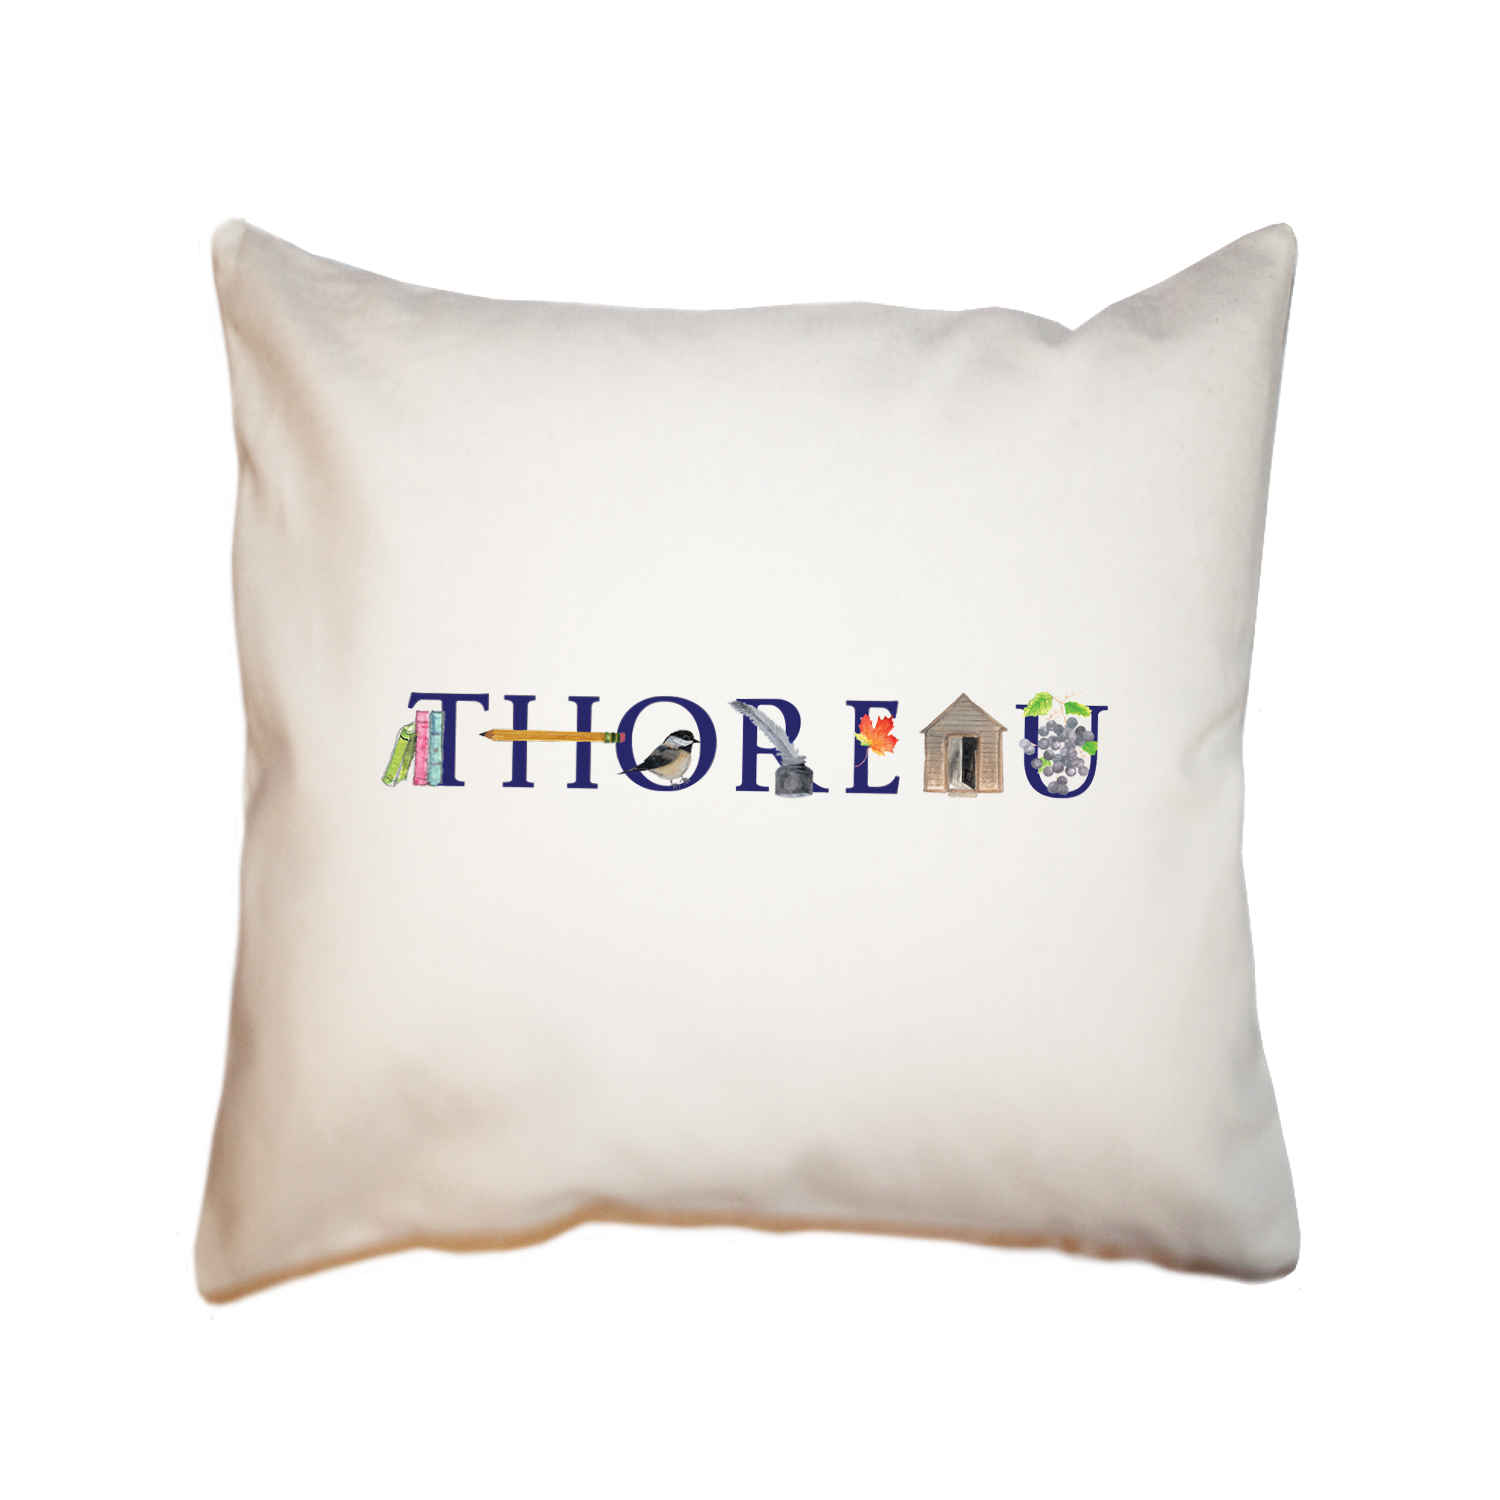 thoreau square pillow